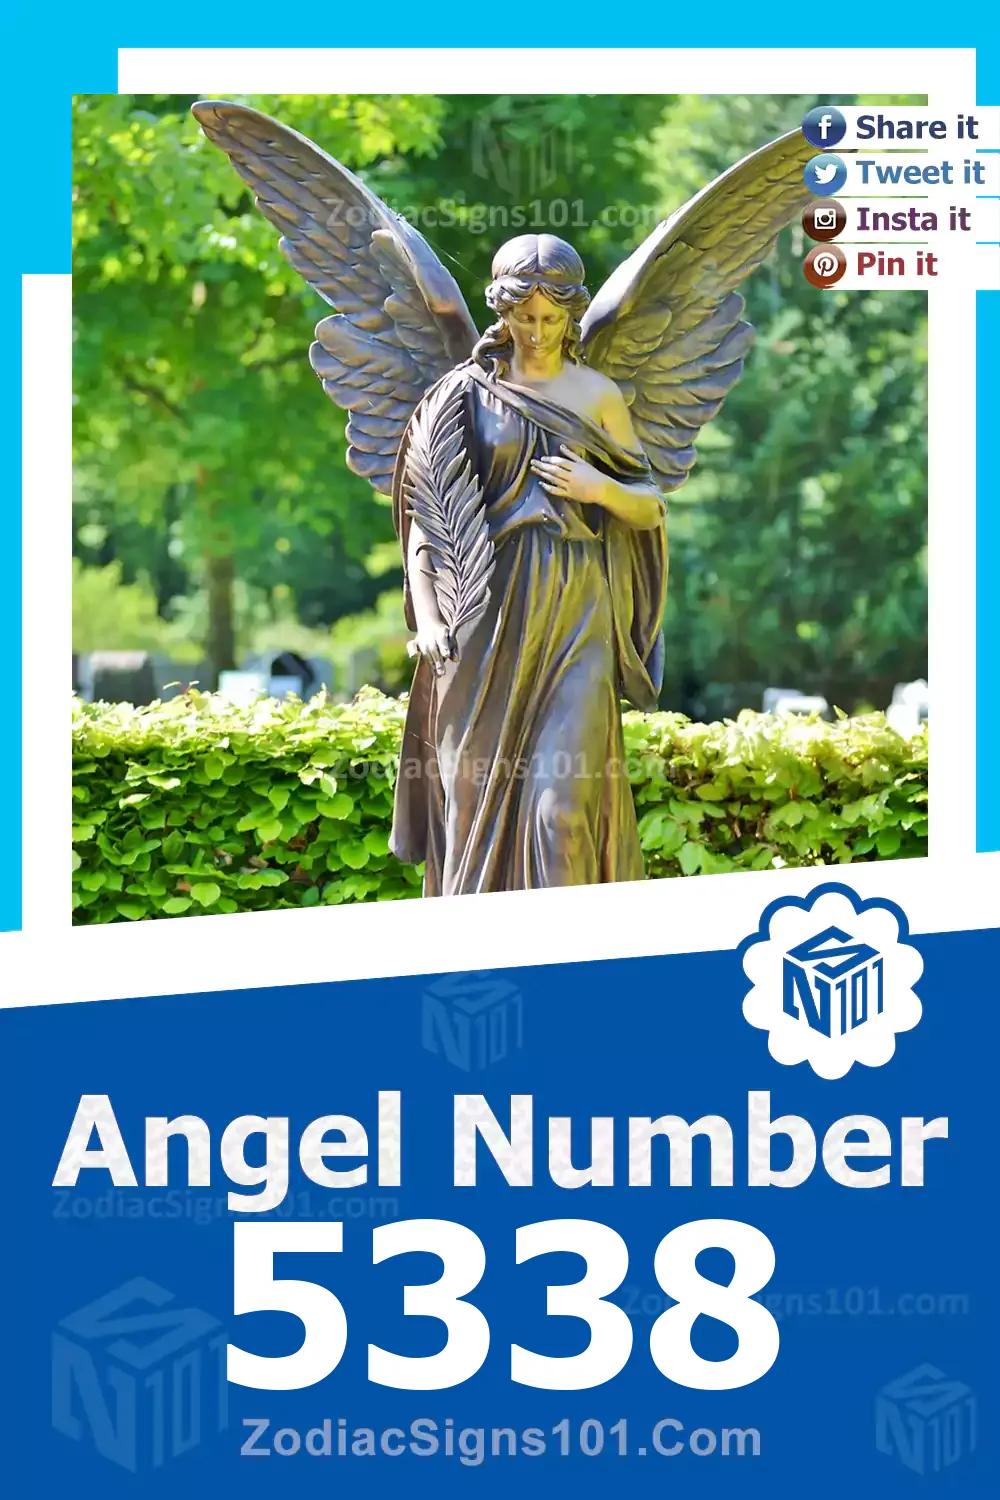 5338-Angel-Number-Meaning.jpg